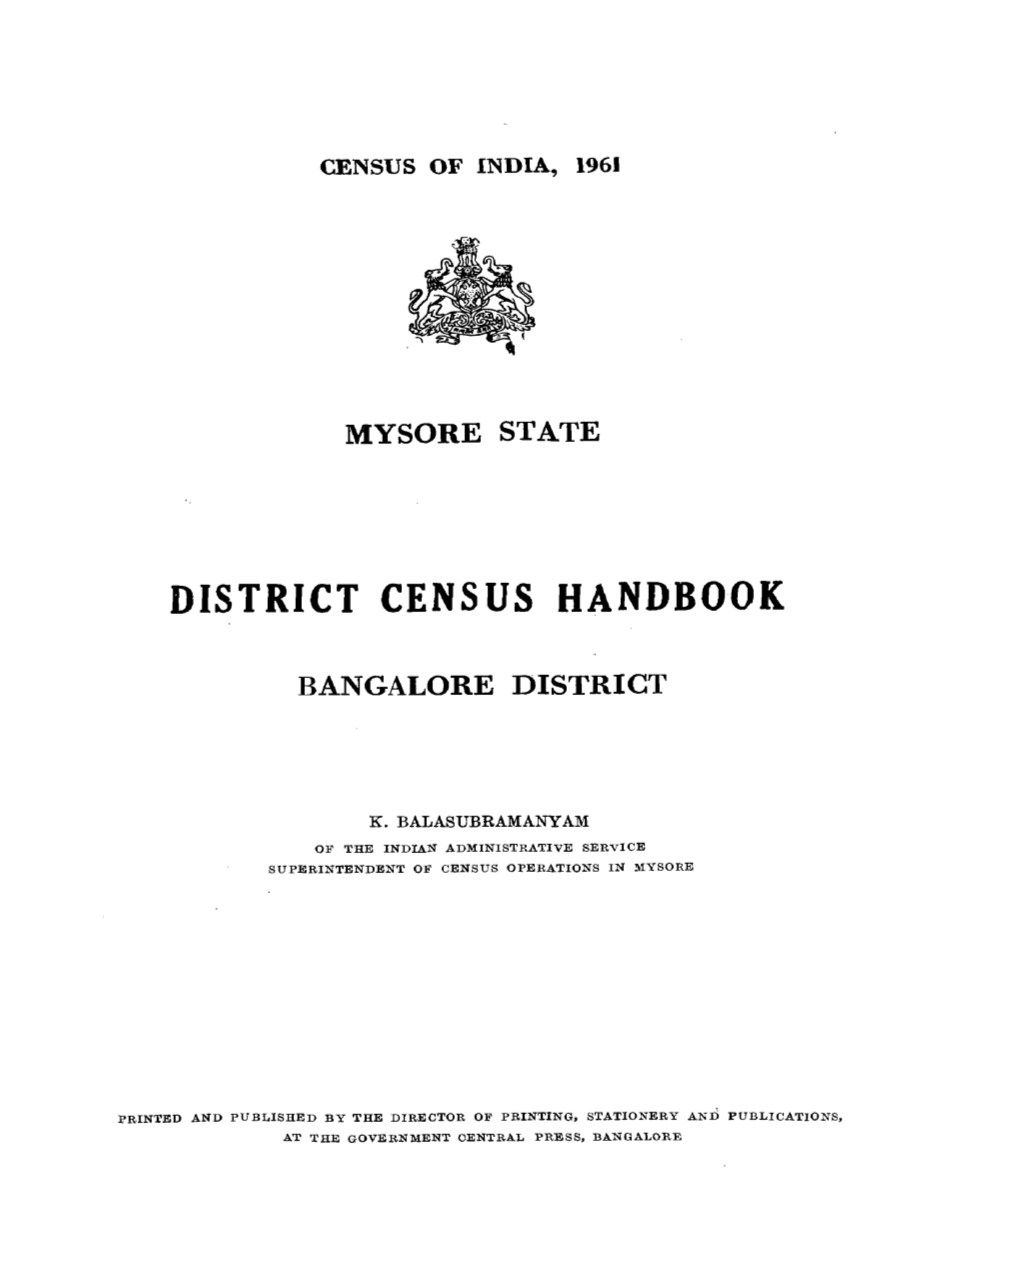 District Census Handbook, Bangalore